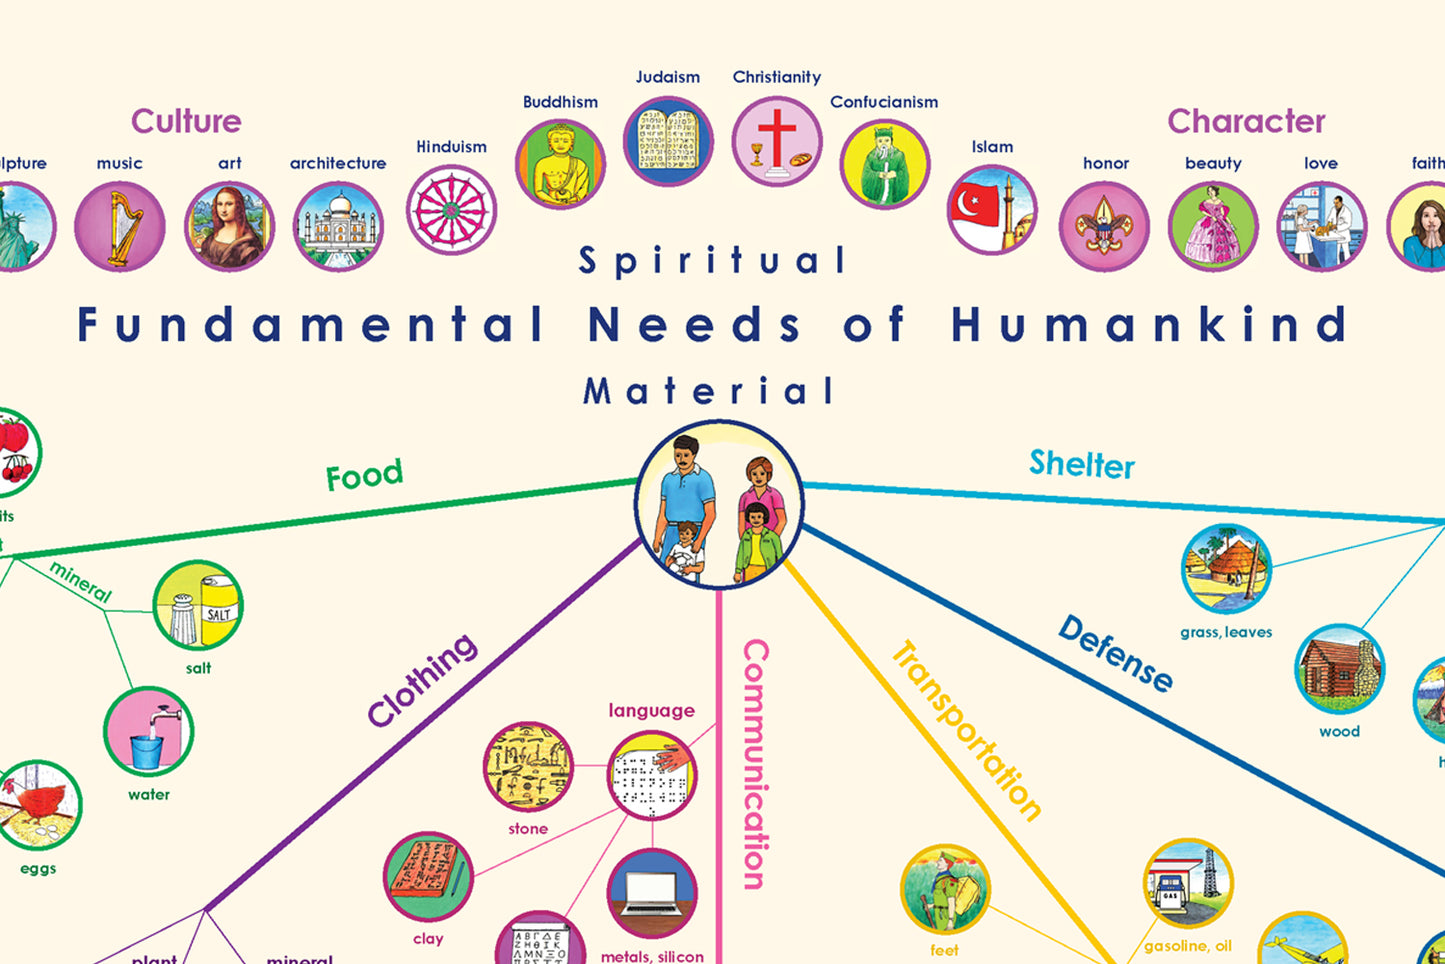 Fundamental Needs of Humankind - Charts and Story Sheets